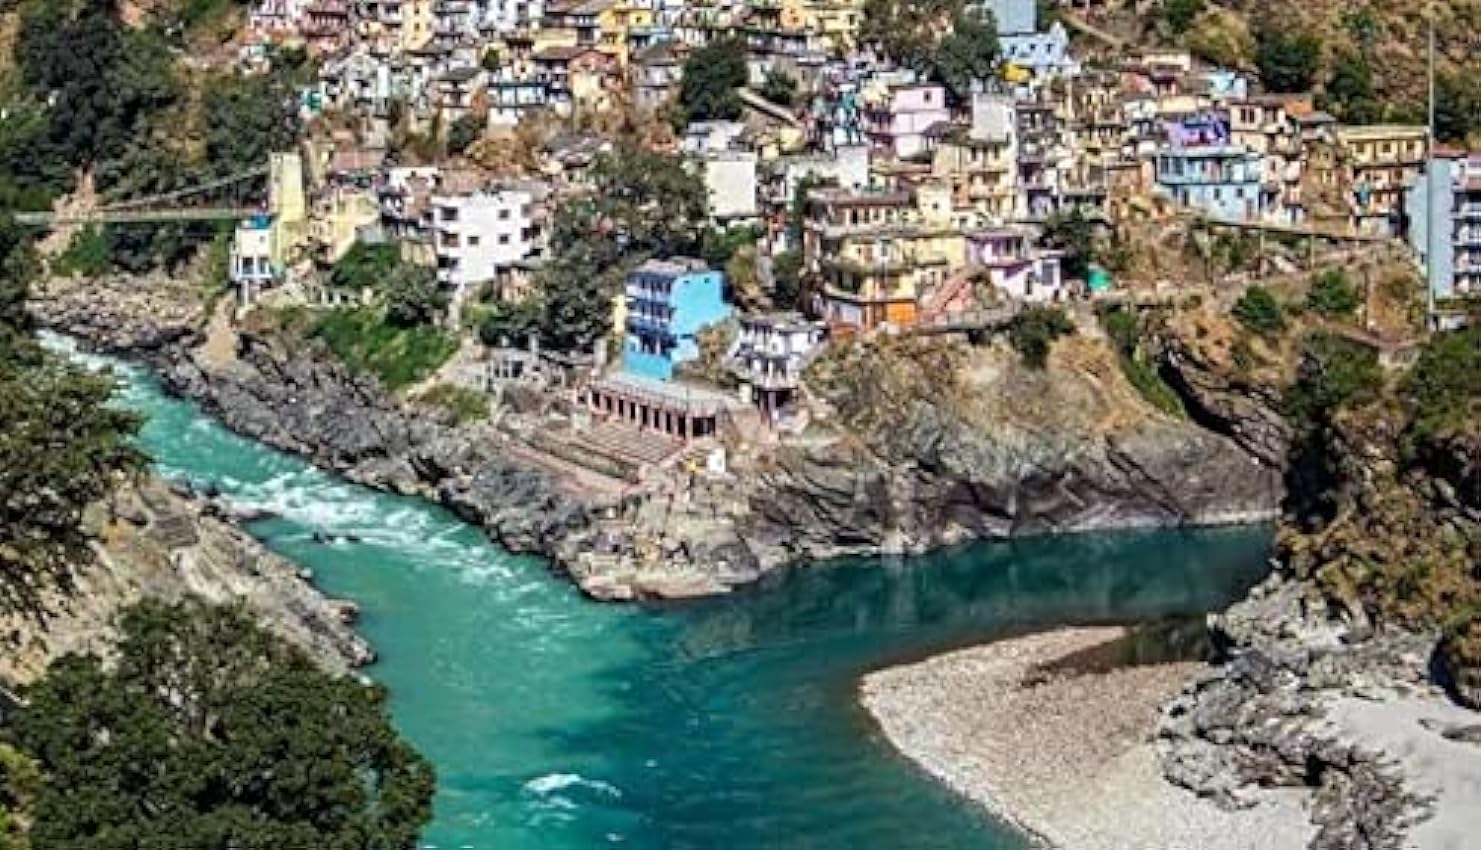 Gangajal Agua Sagrada de Ganga Desde el Comienzo del Río Ganga en Devprayag en Botella de Vidrio Transparente 100ml (3,38 oz). BiZJYAXu